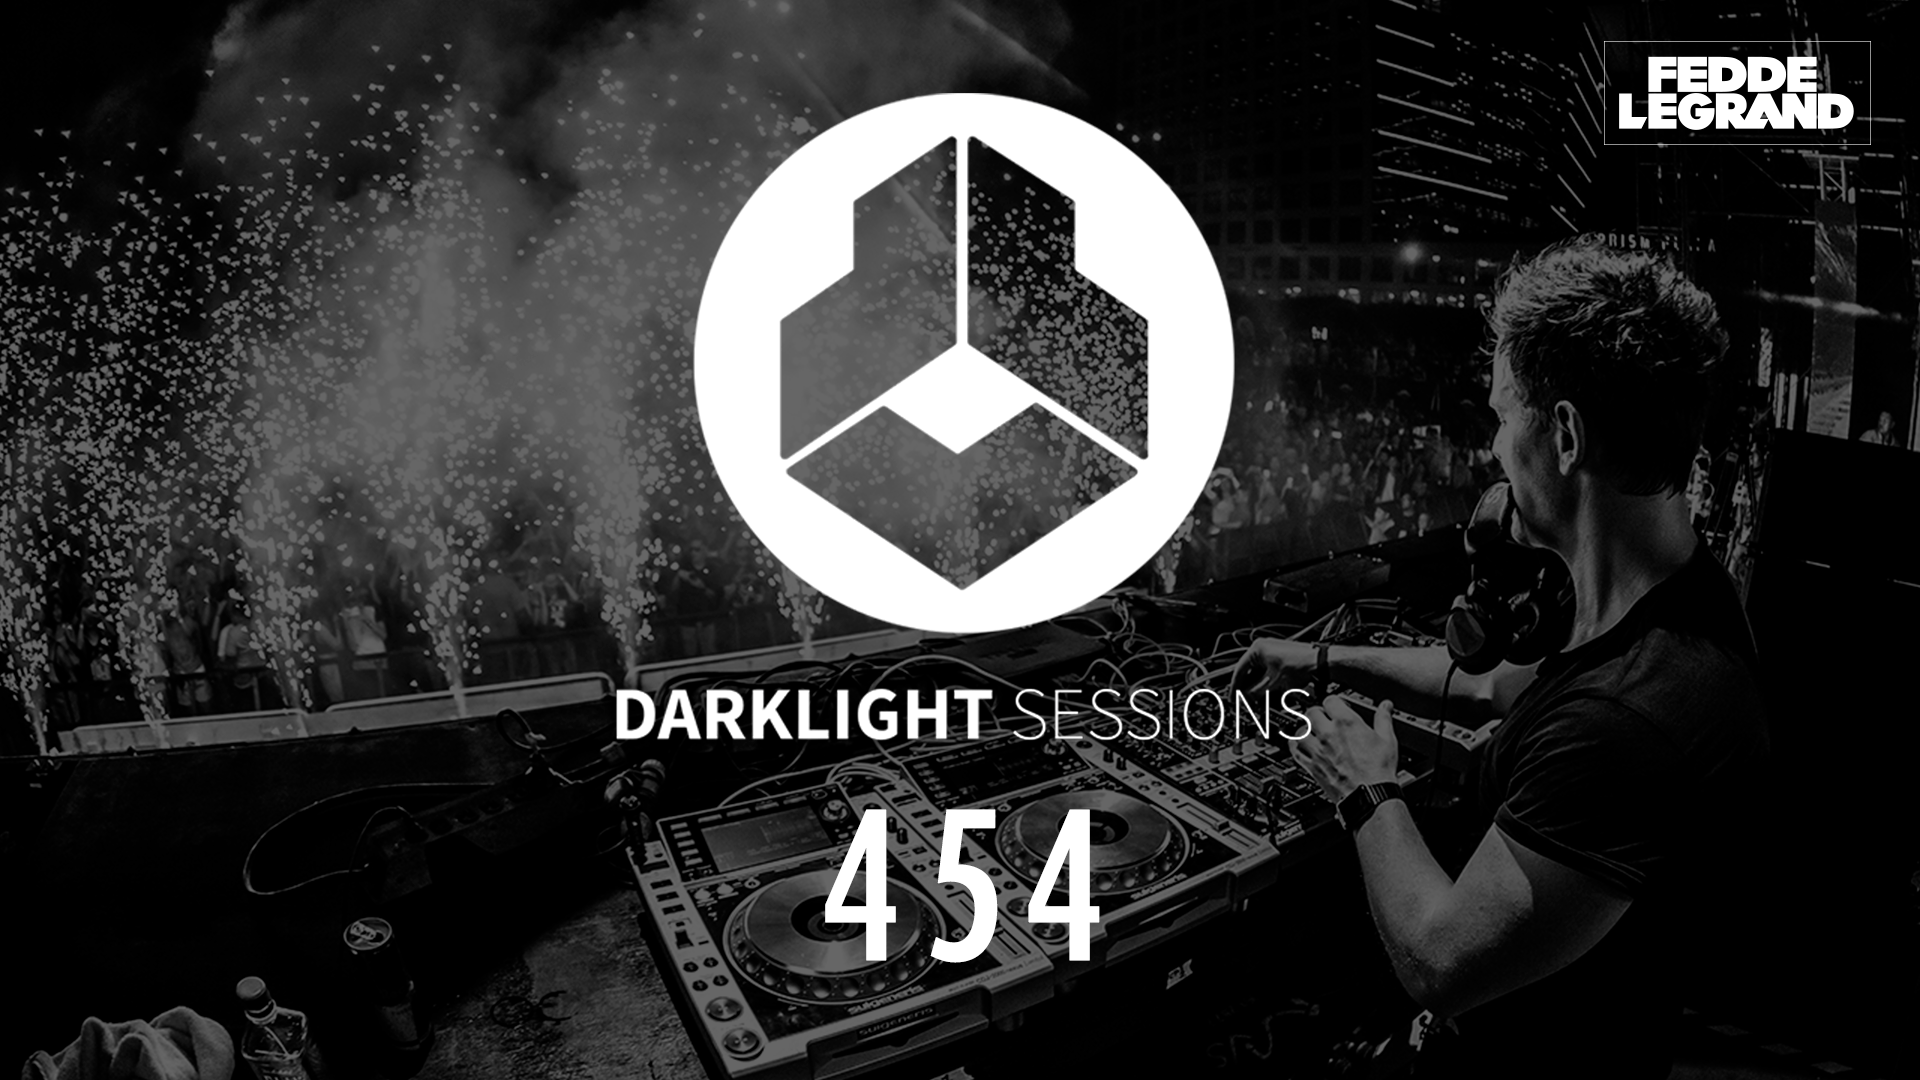 Darklight Sessions 454